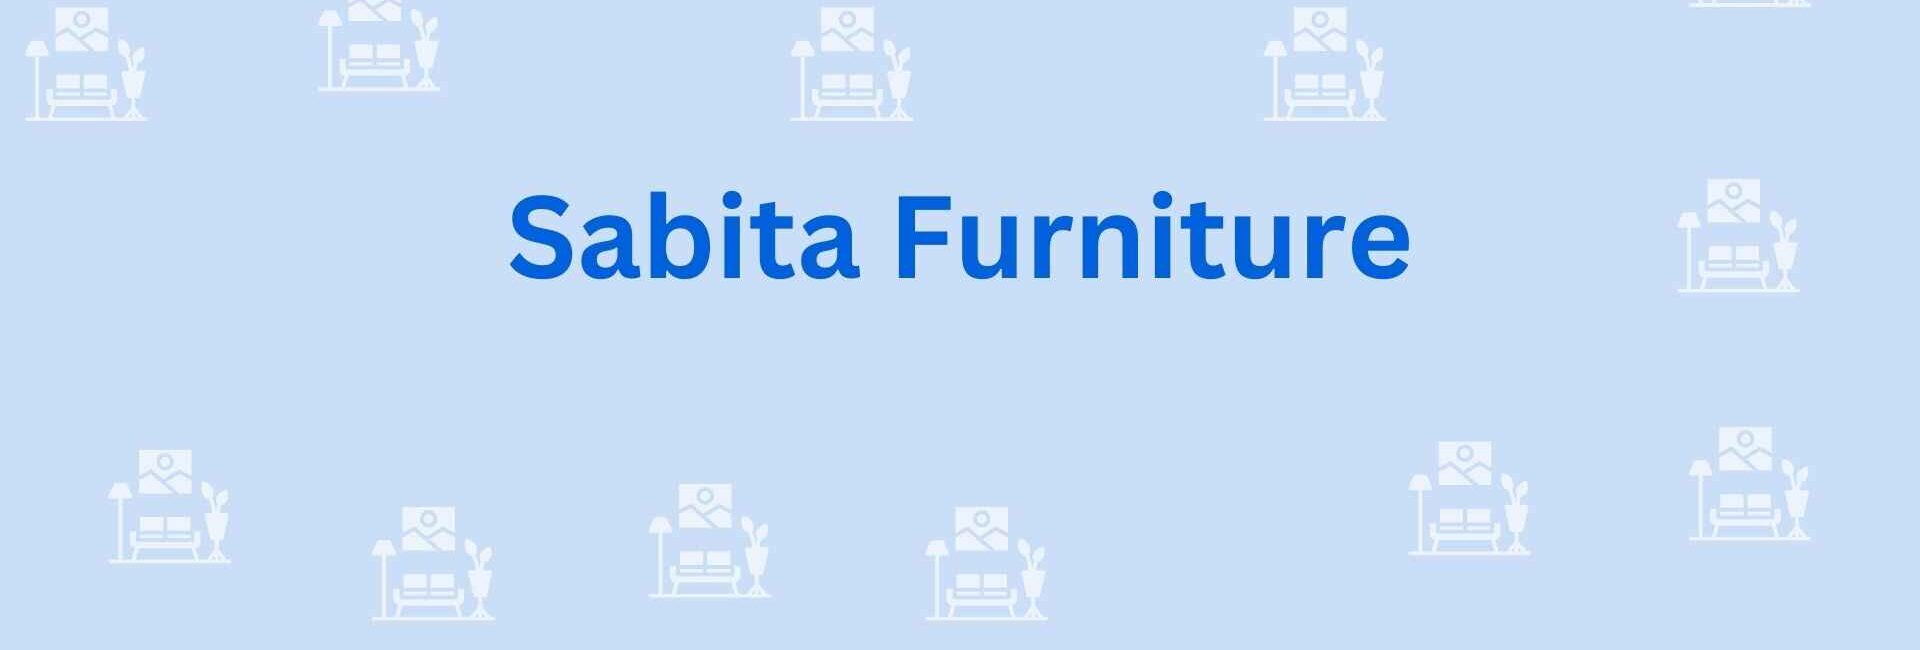 Sabita Furniture - Furniture Dealer in Noida